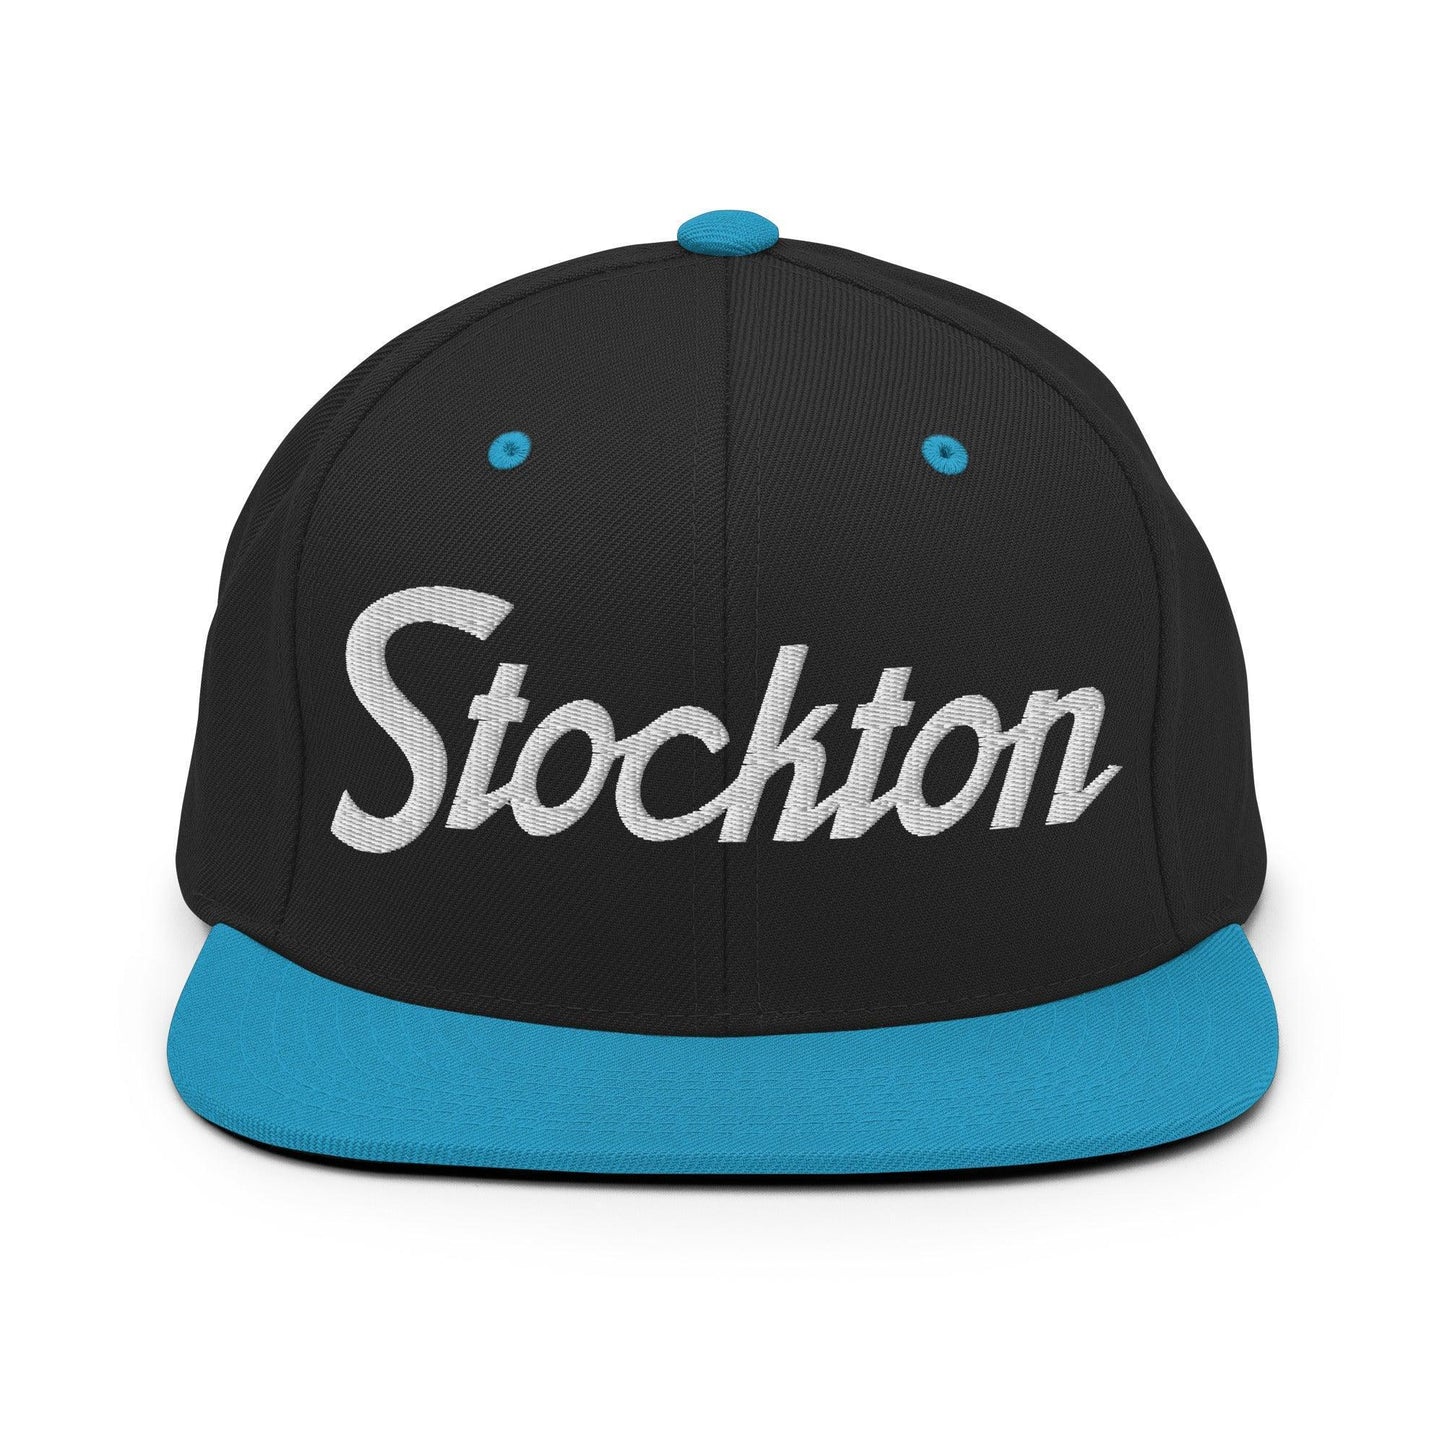 Stockton Script Snapback Hat Black Teal